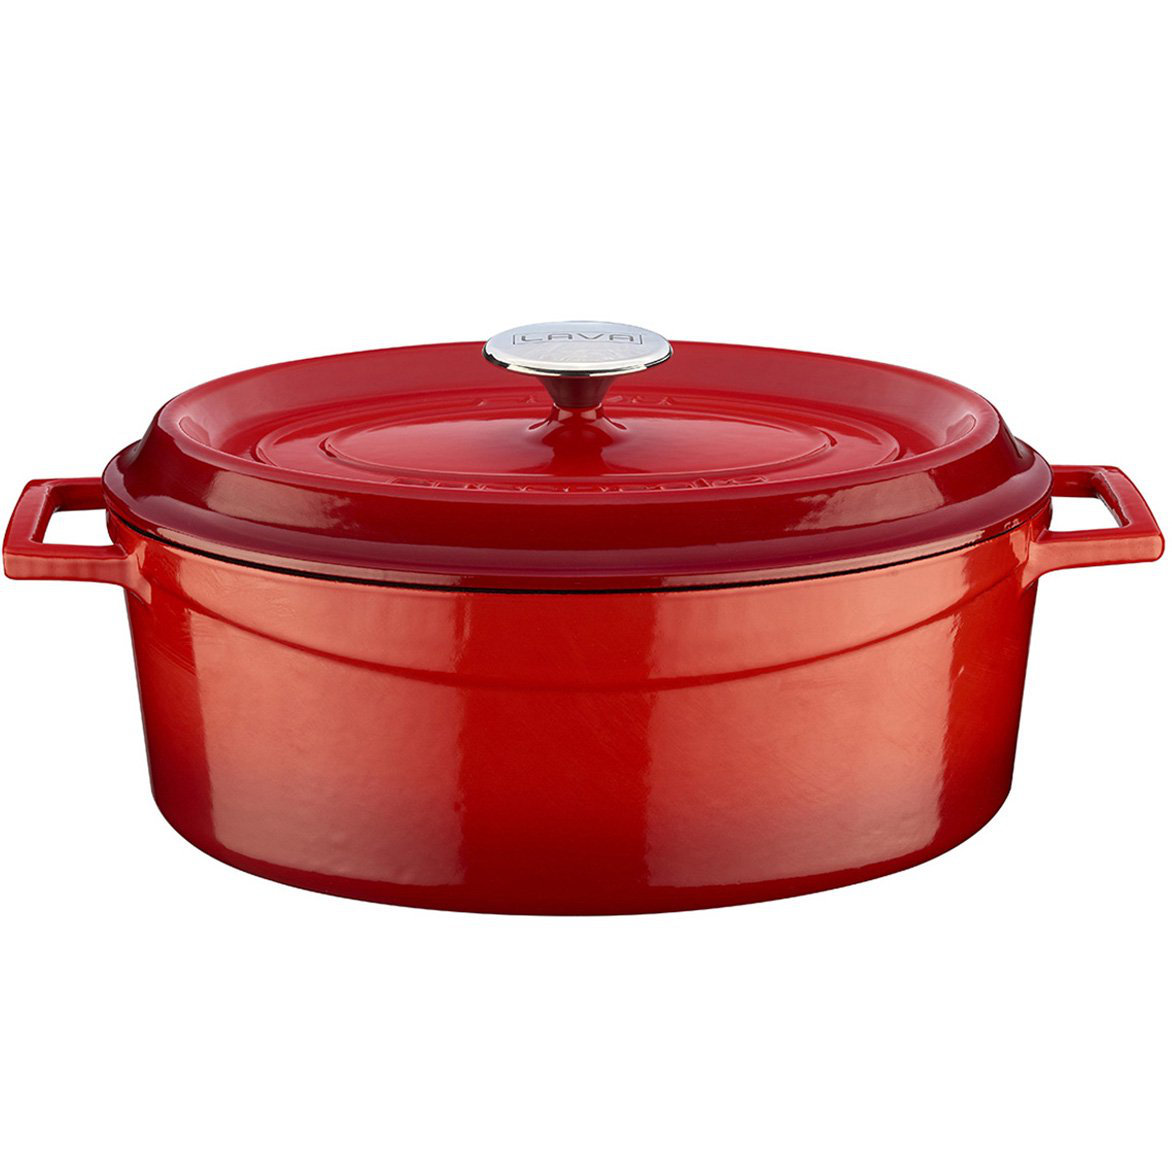 Cuisinart Oval Casserole 7 Qt Enameled Cast Iron Red Dishwasher Safe 